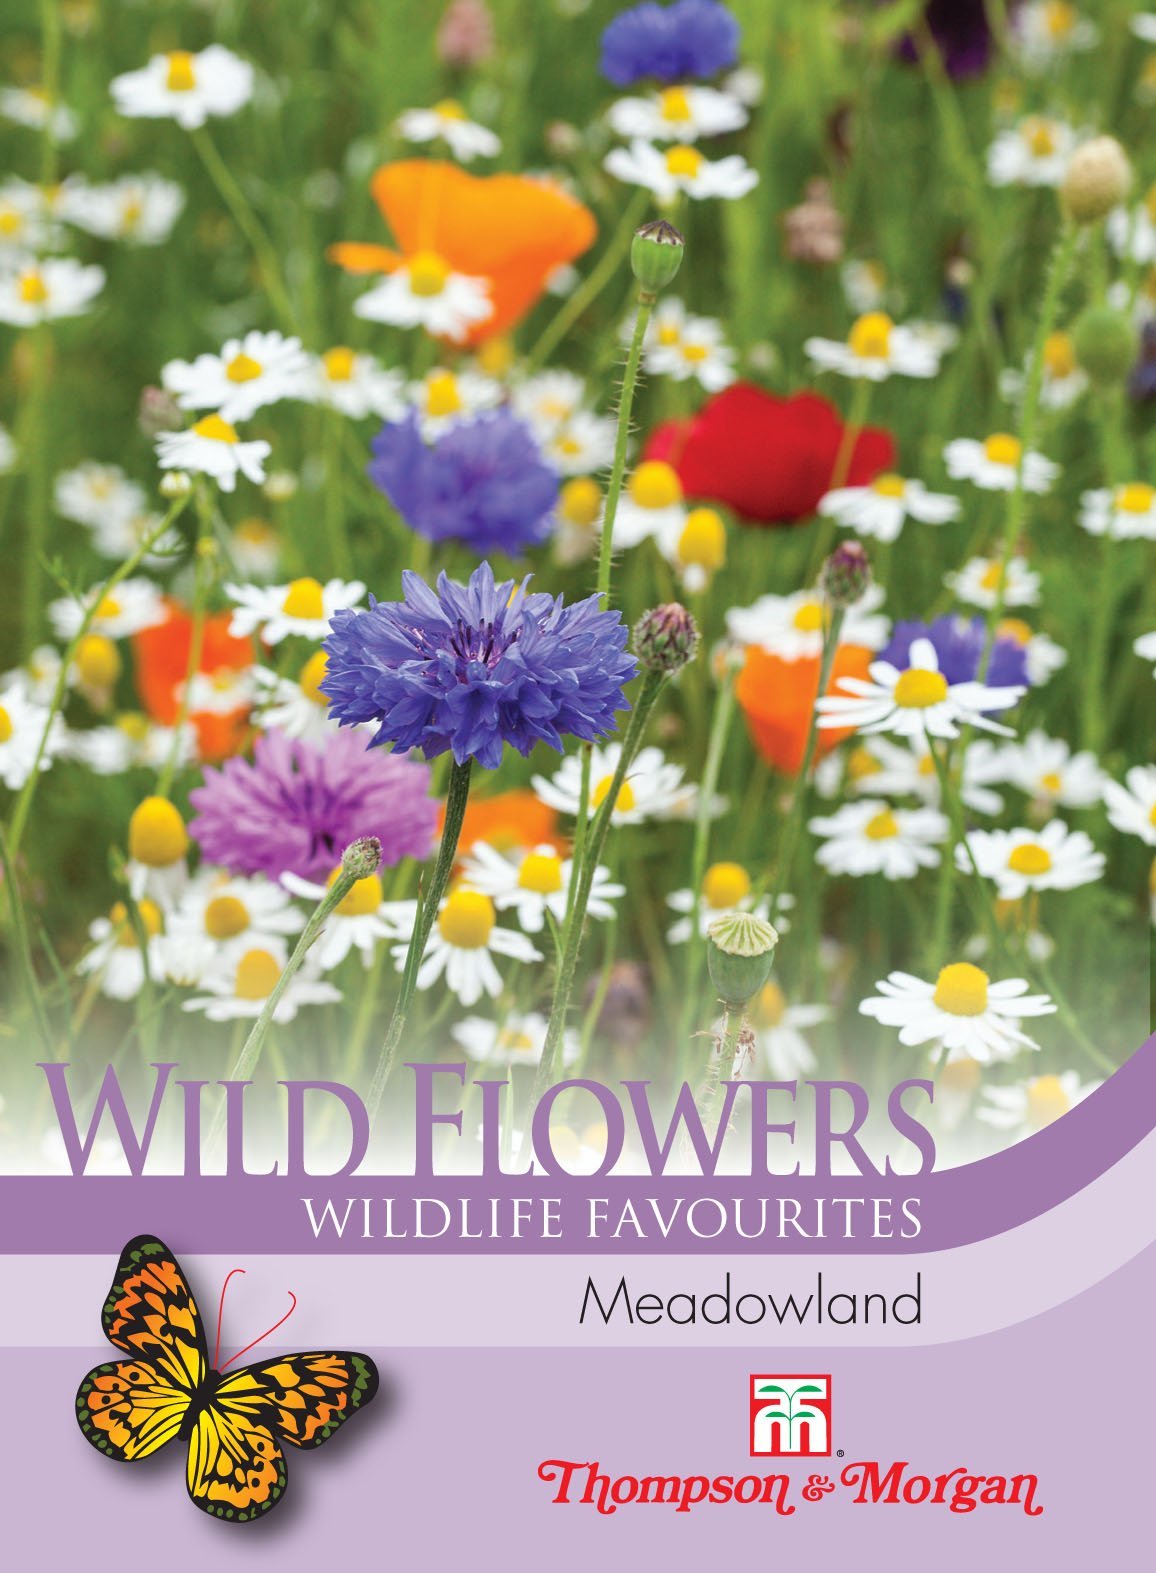 Wild Flower Meadowland - The Pavilion